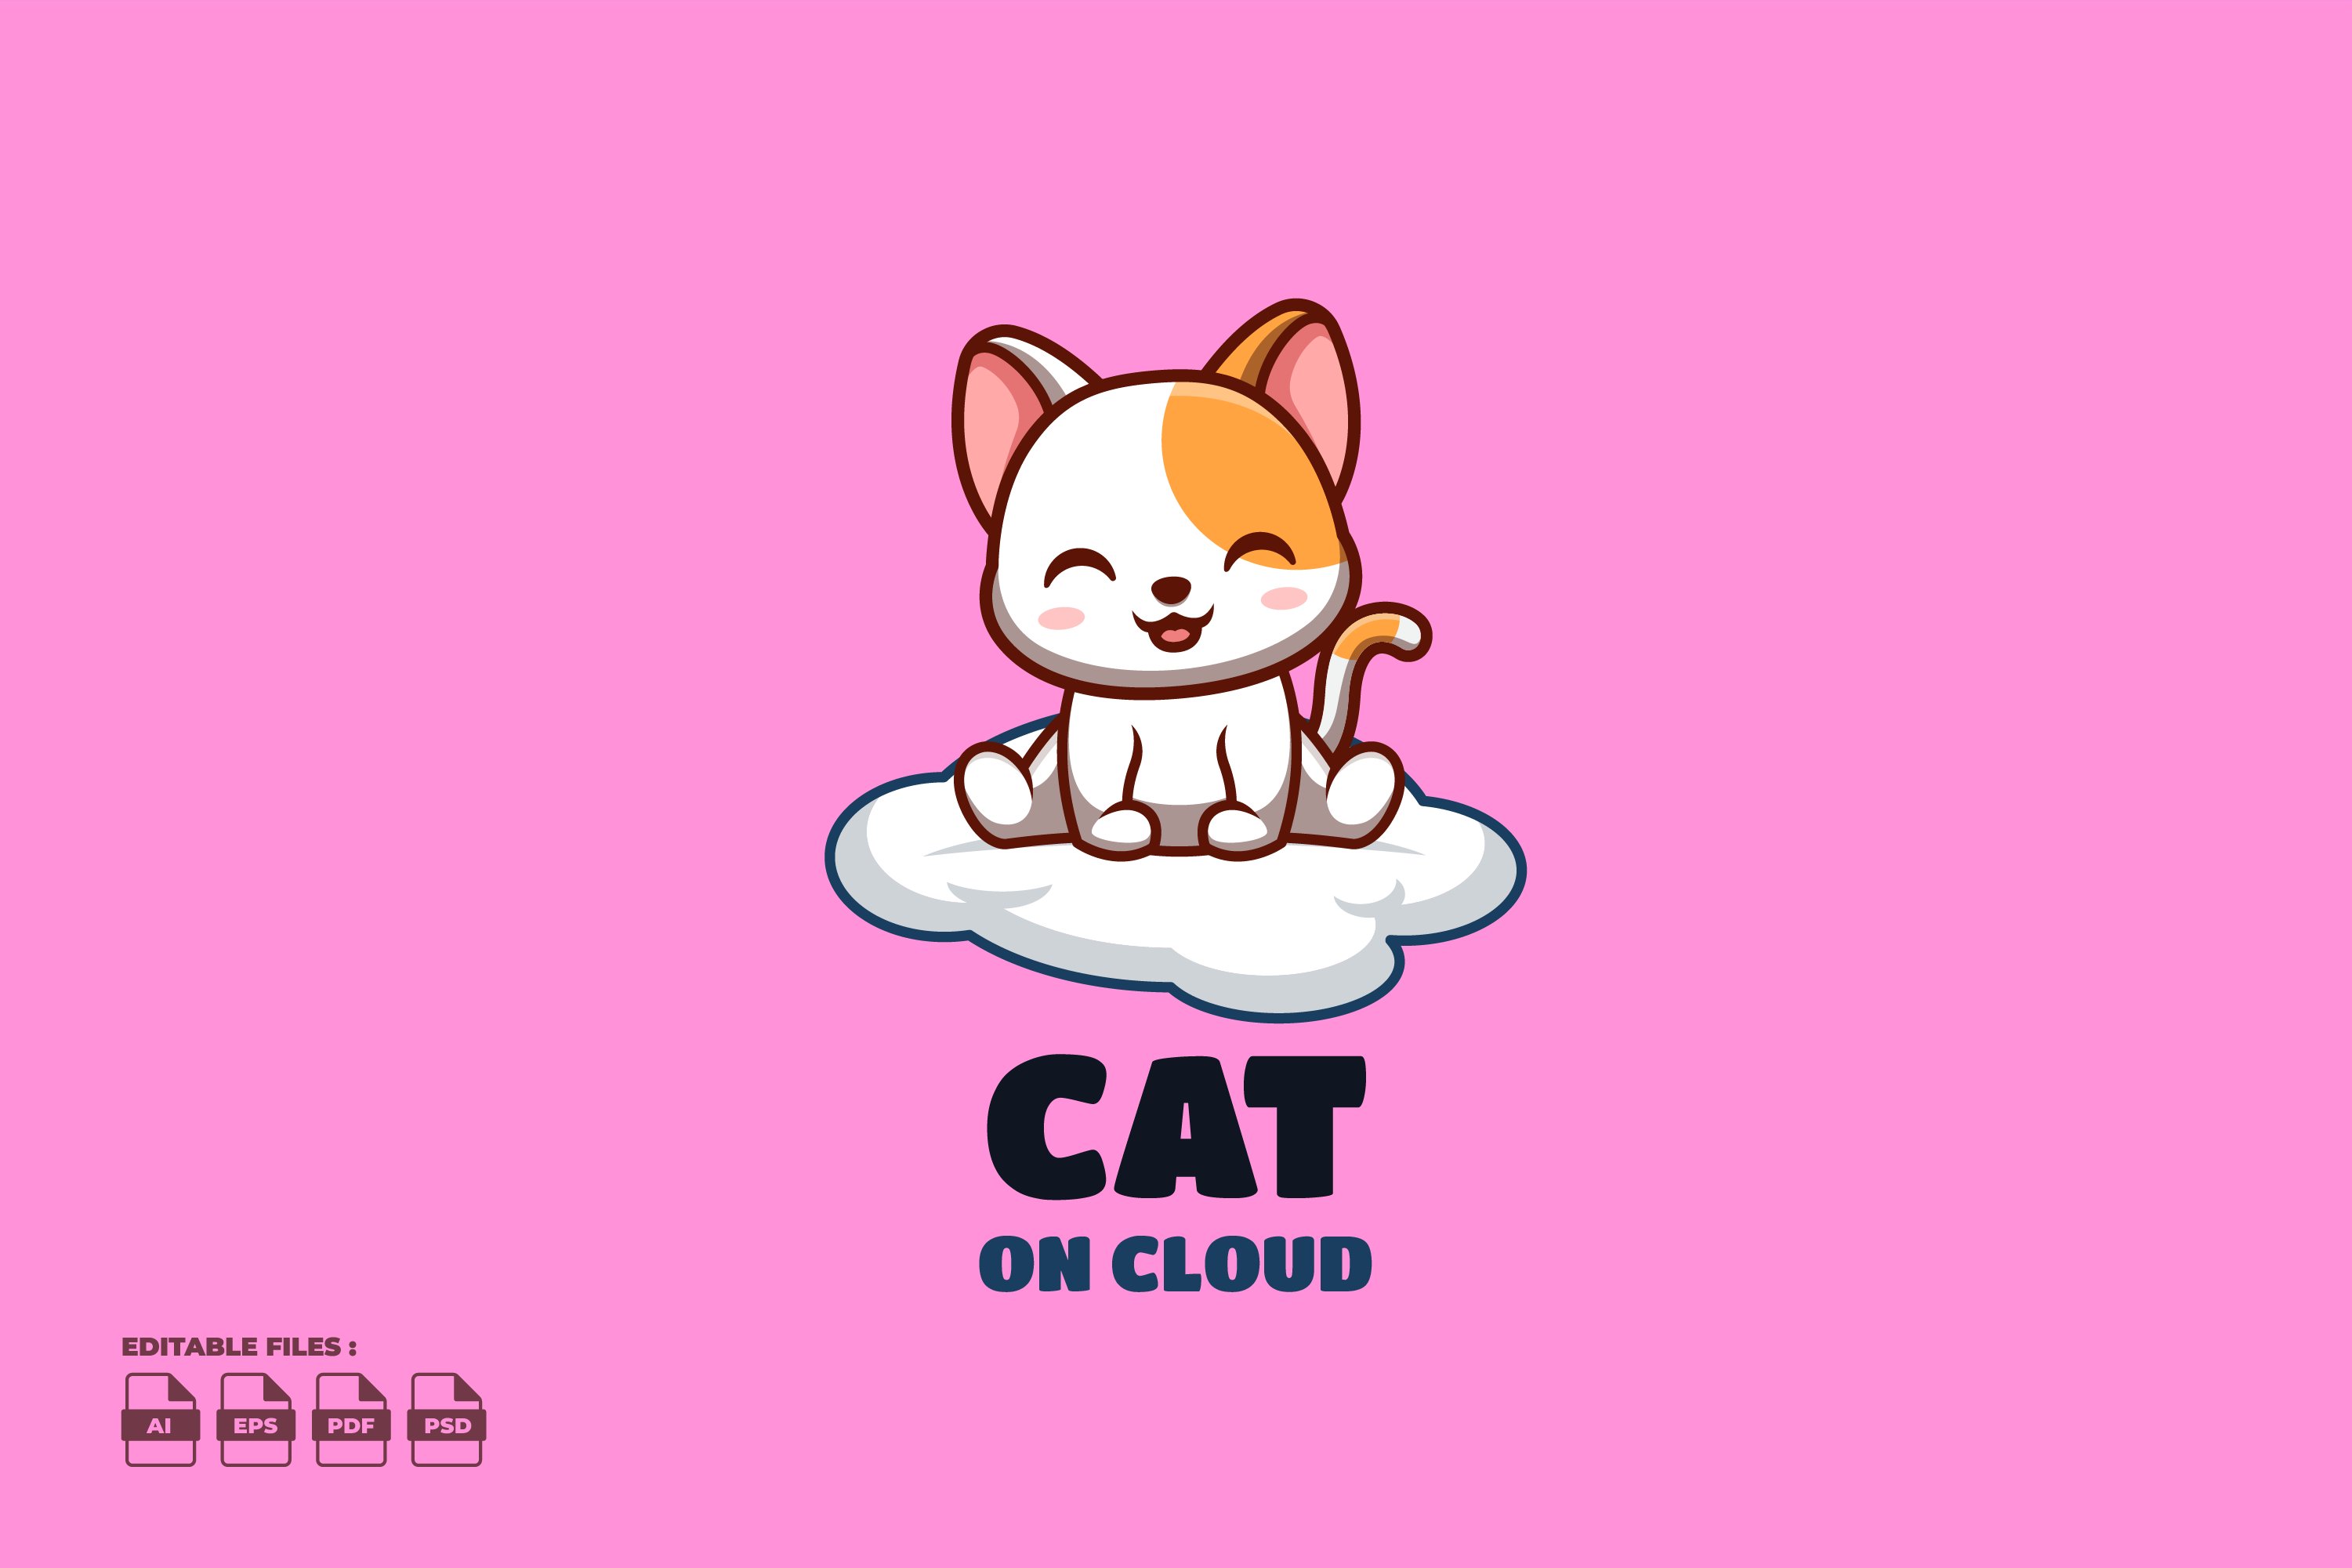 On Cloud White Cat Cute Mascot Logo cover image.